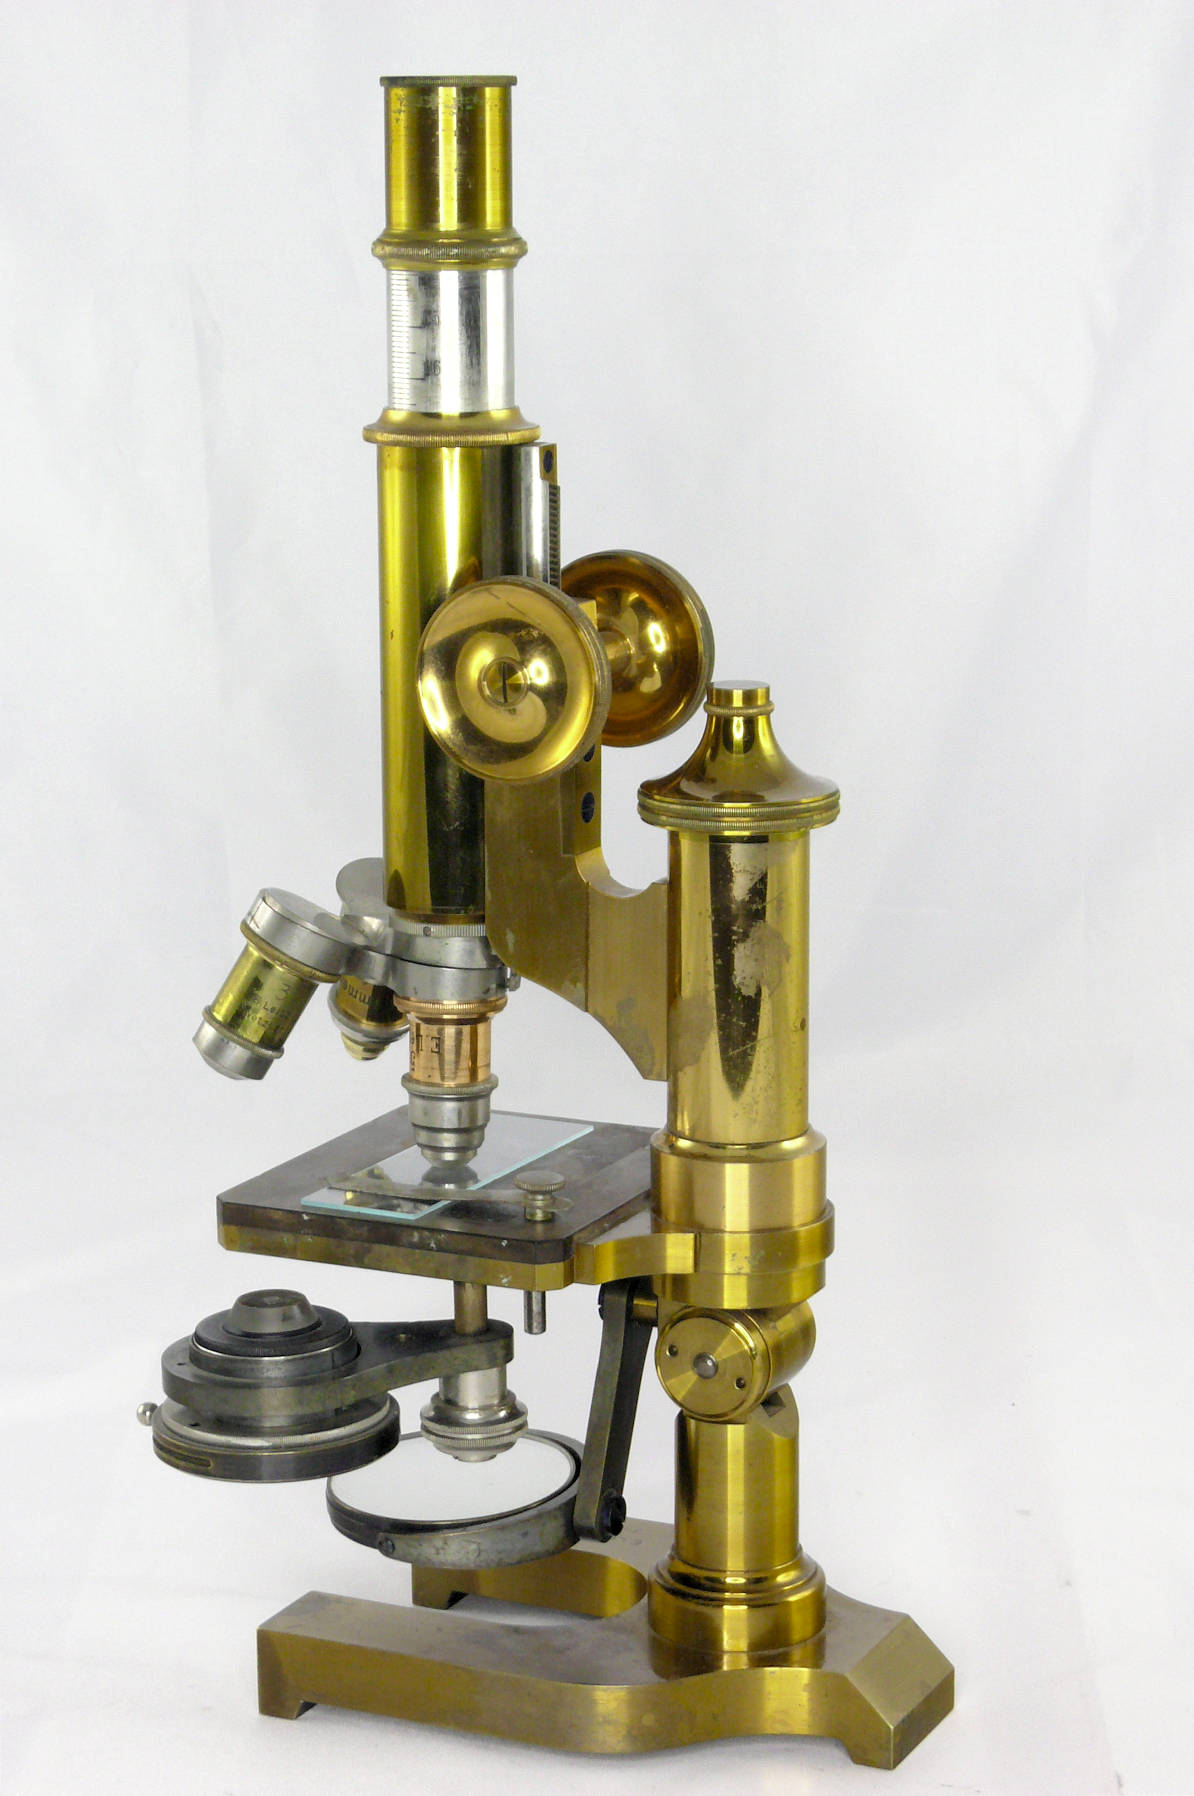 Microscope composé
(inclinable, pied en fer à cheval)